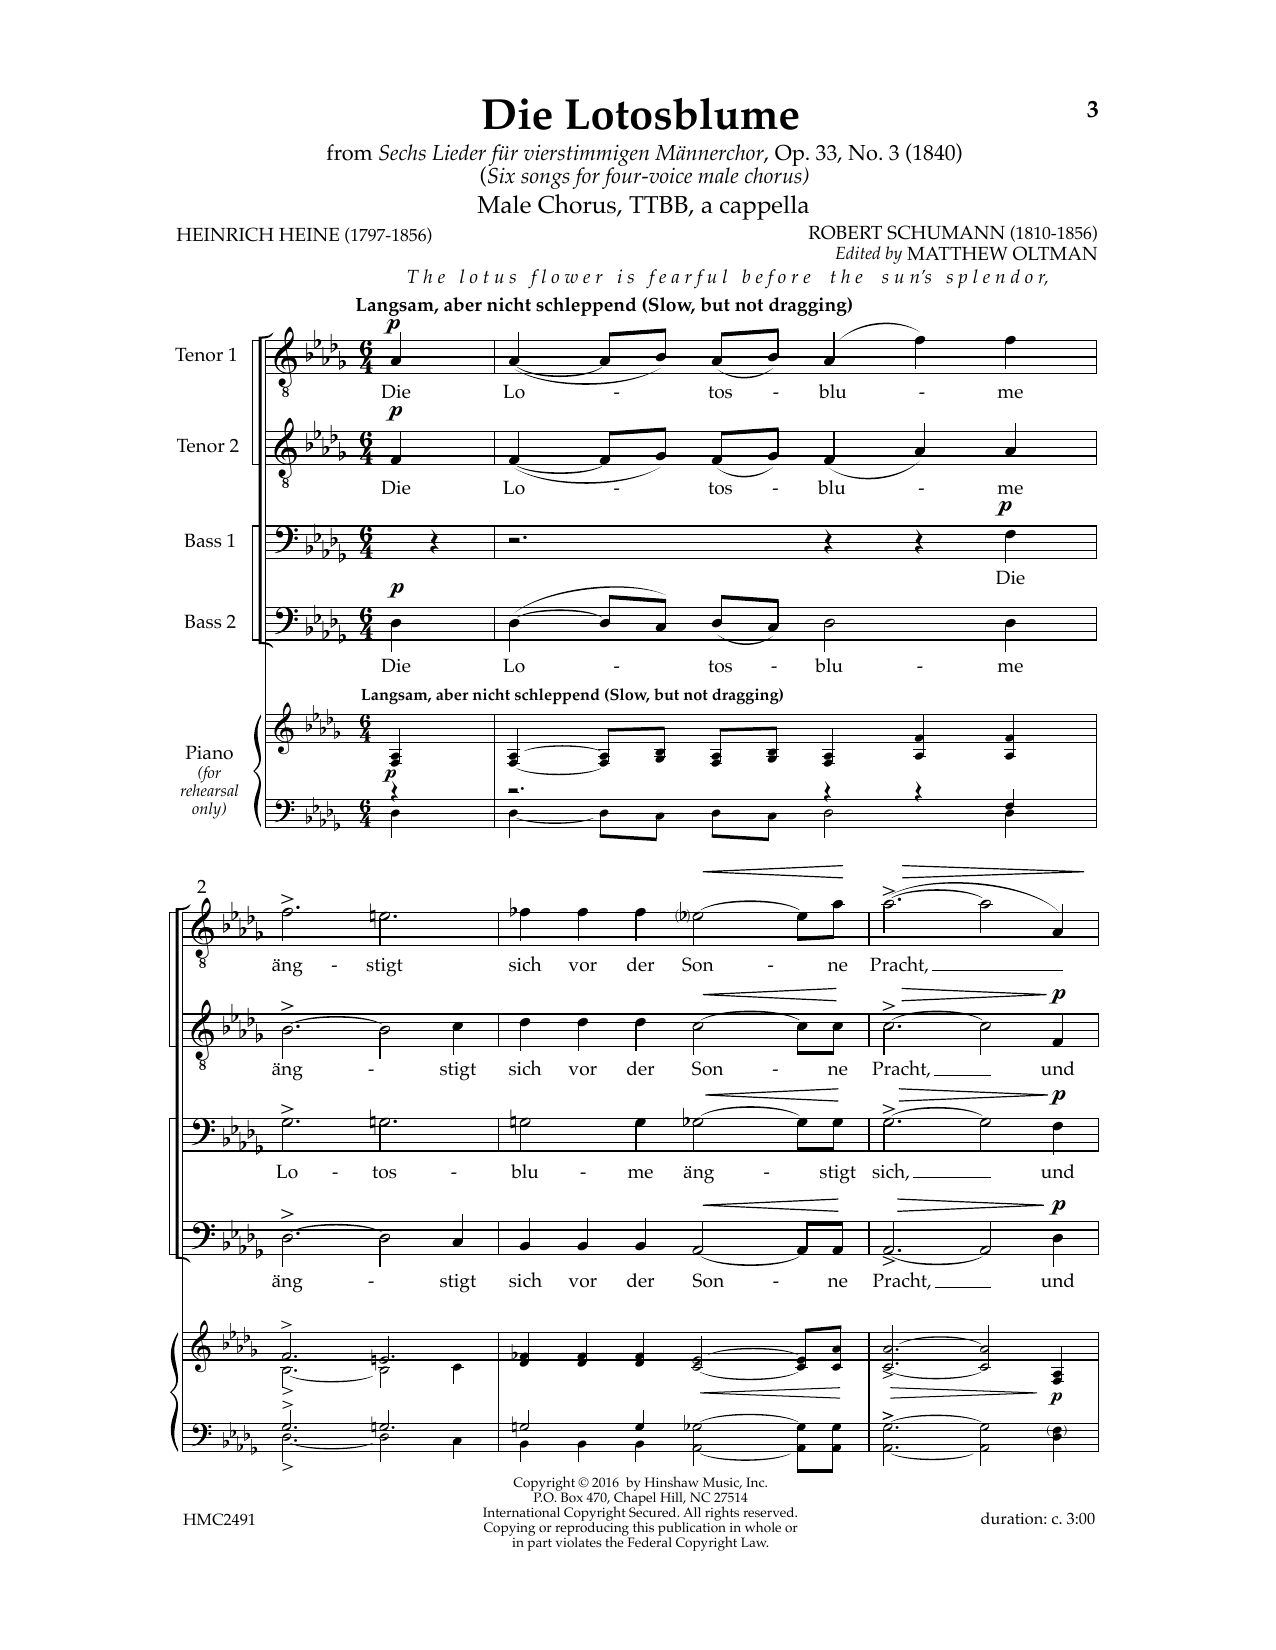 Robert Schumann Die Lotosblume (Ed. Matthew D. Oltman) Sheet Music Notes & Chords for TTBB Choir - Download or Print PDF